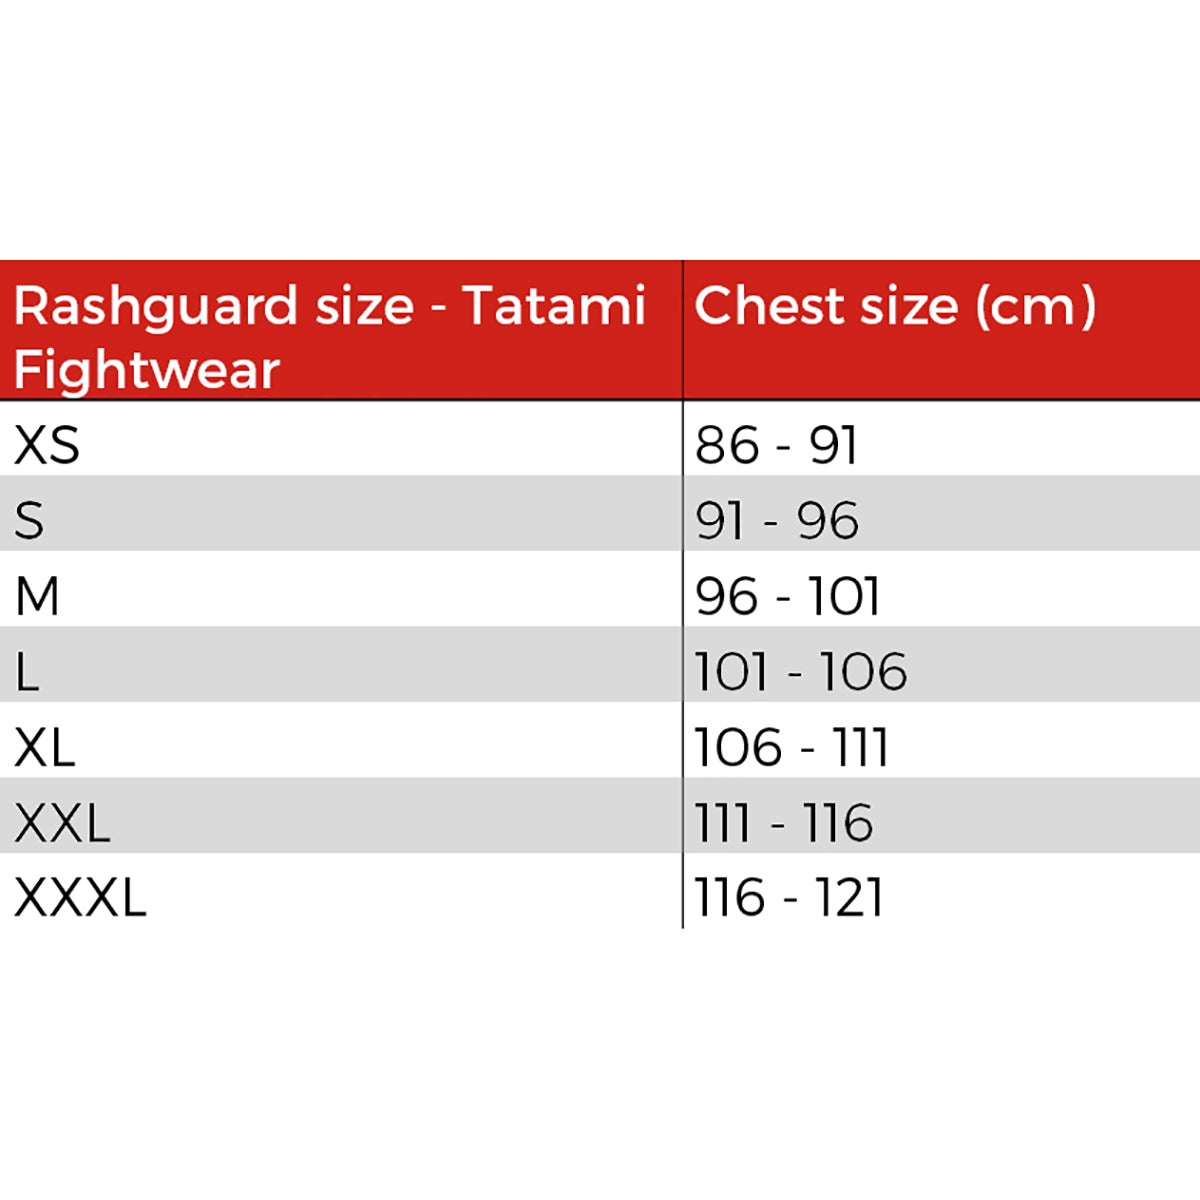 Tatami Fightwear Recharge Short Sleeve Rashguard - Camo Tatami Fightwear